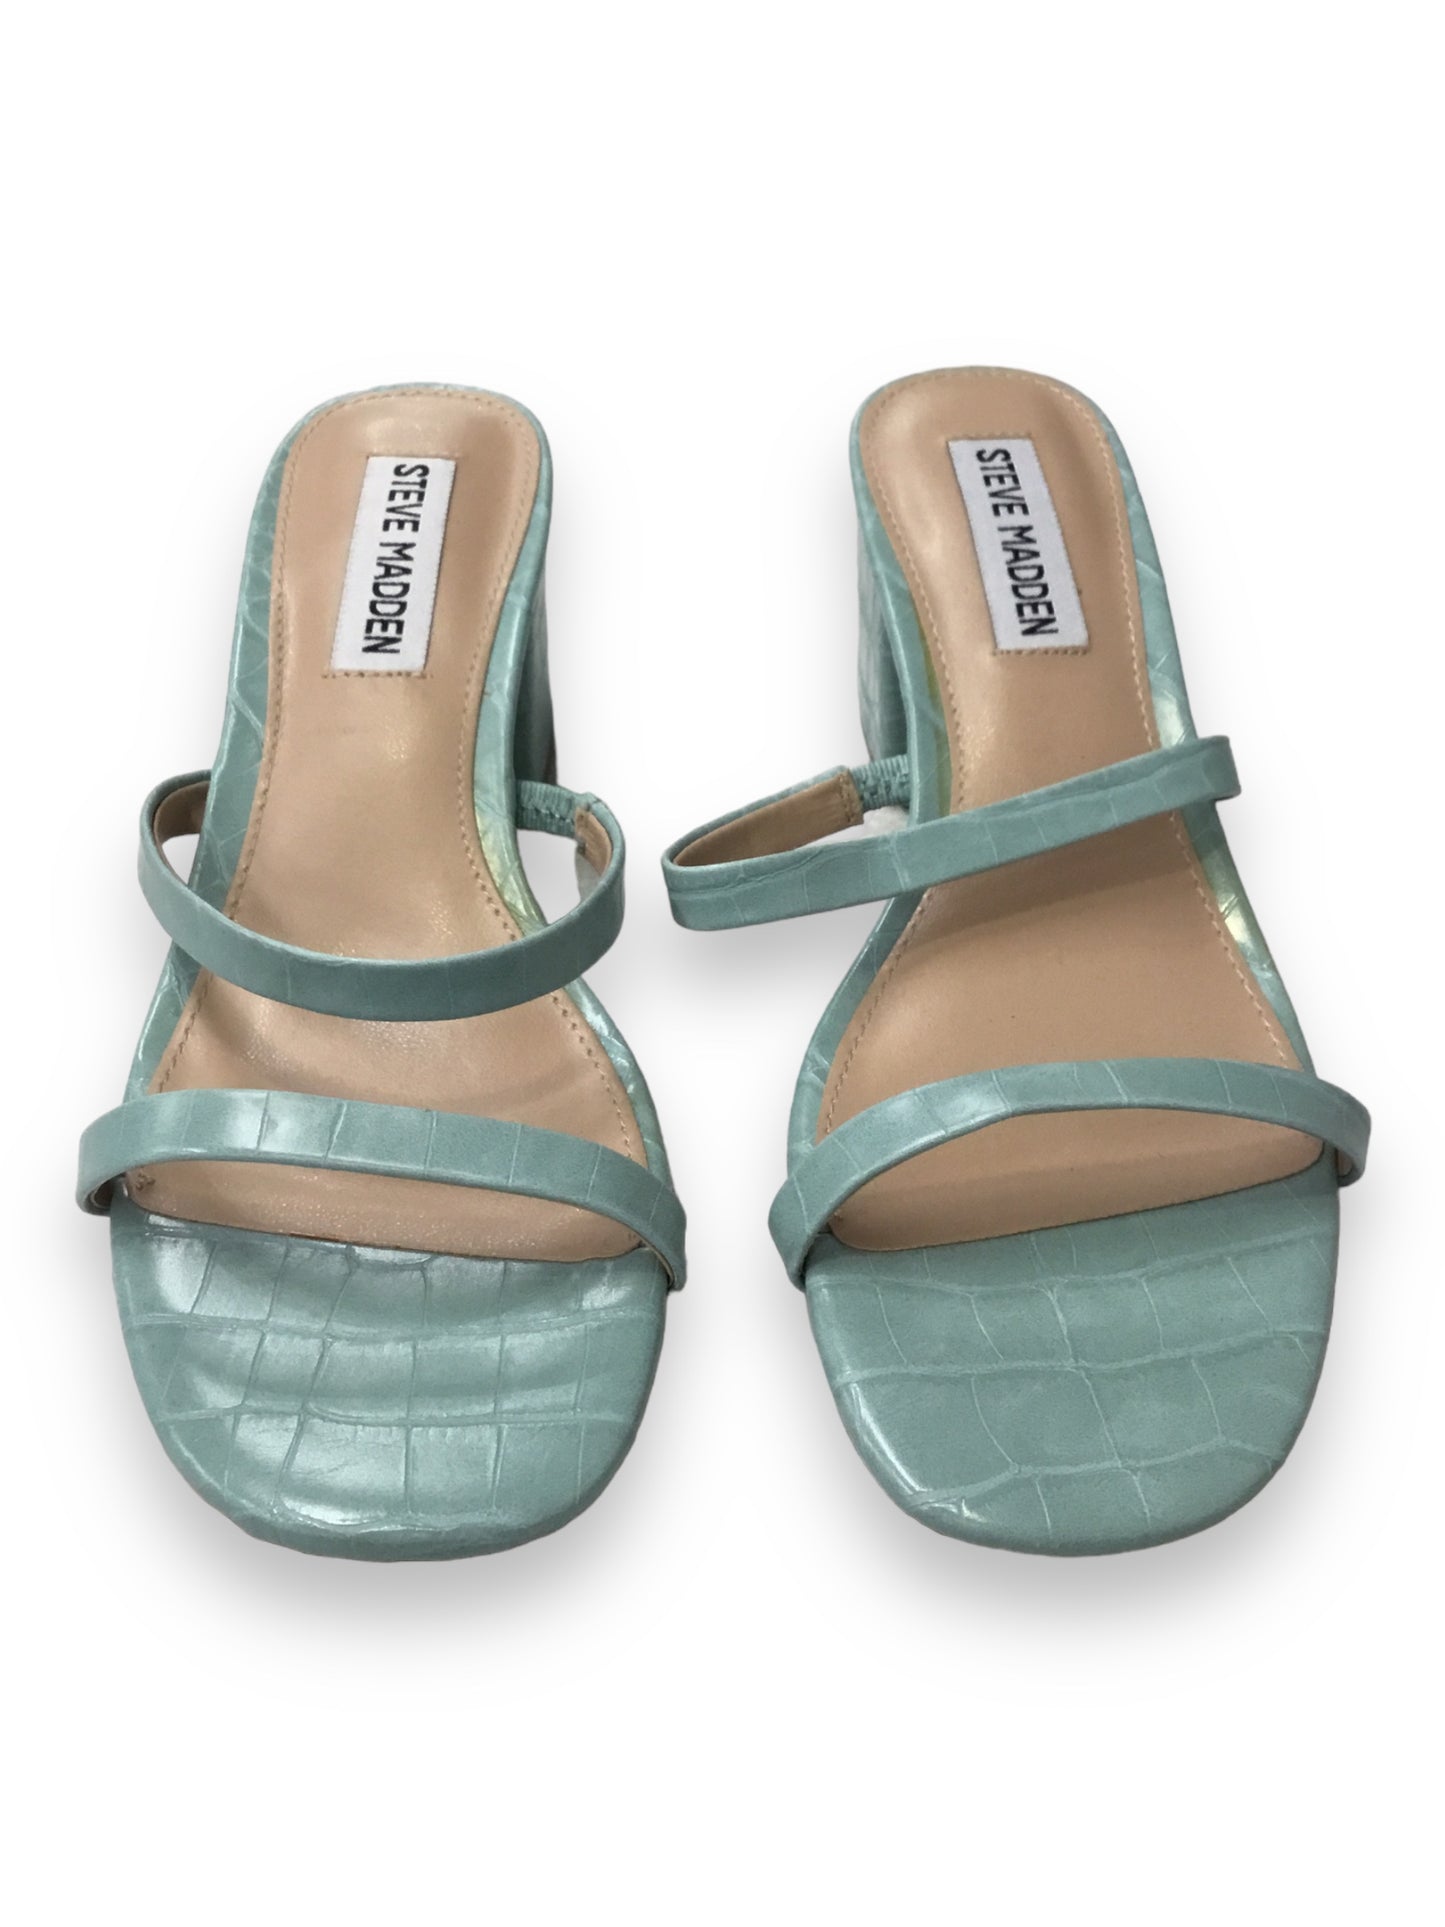 Sandals Heels Block By Steve Madden  Size: 6.5